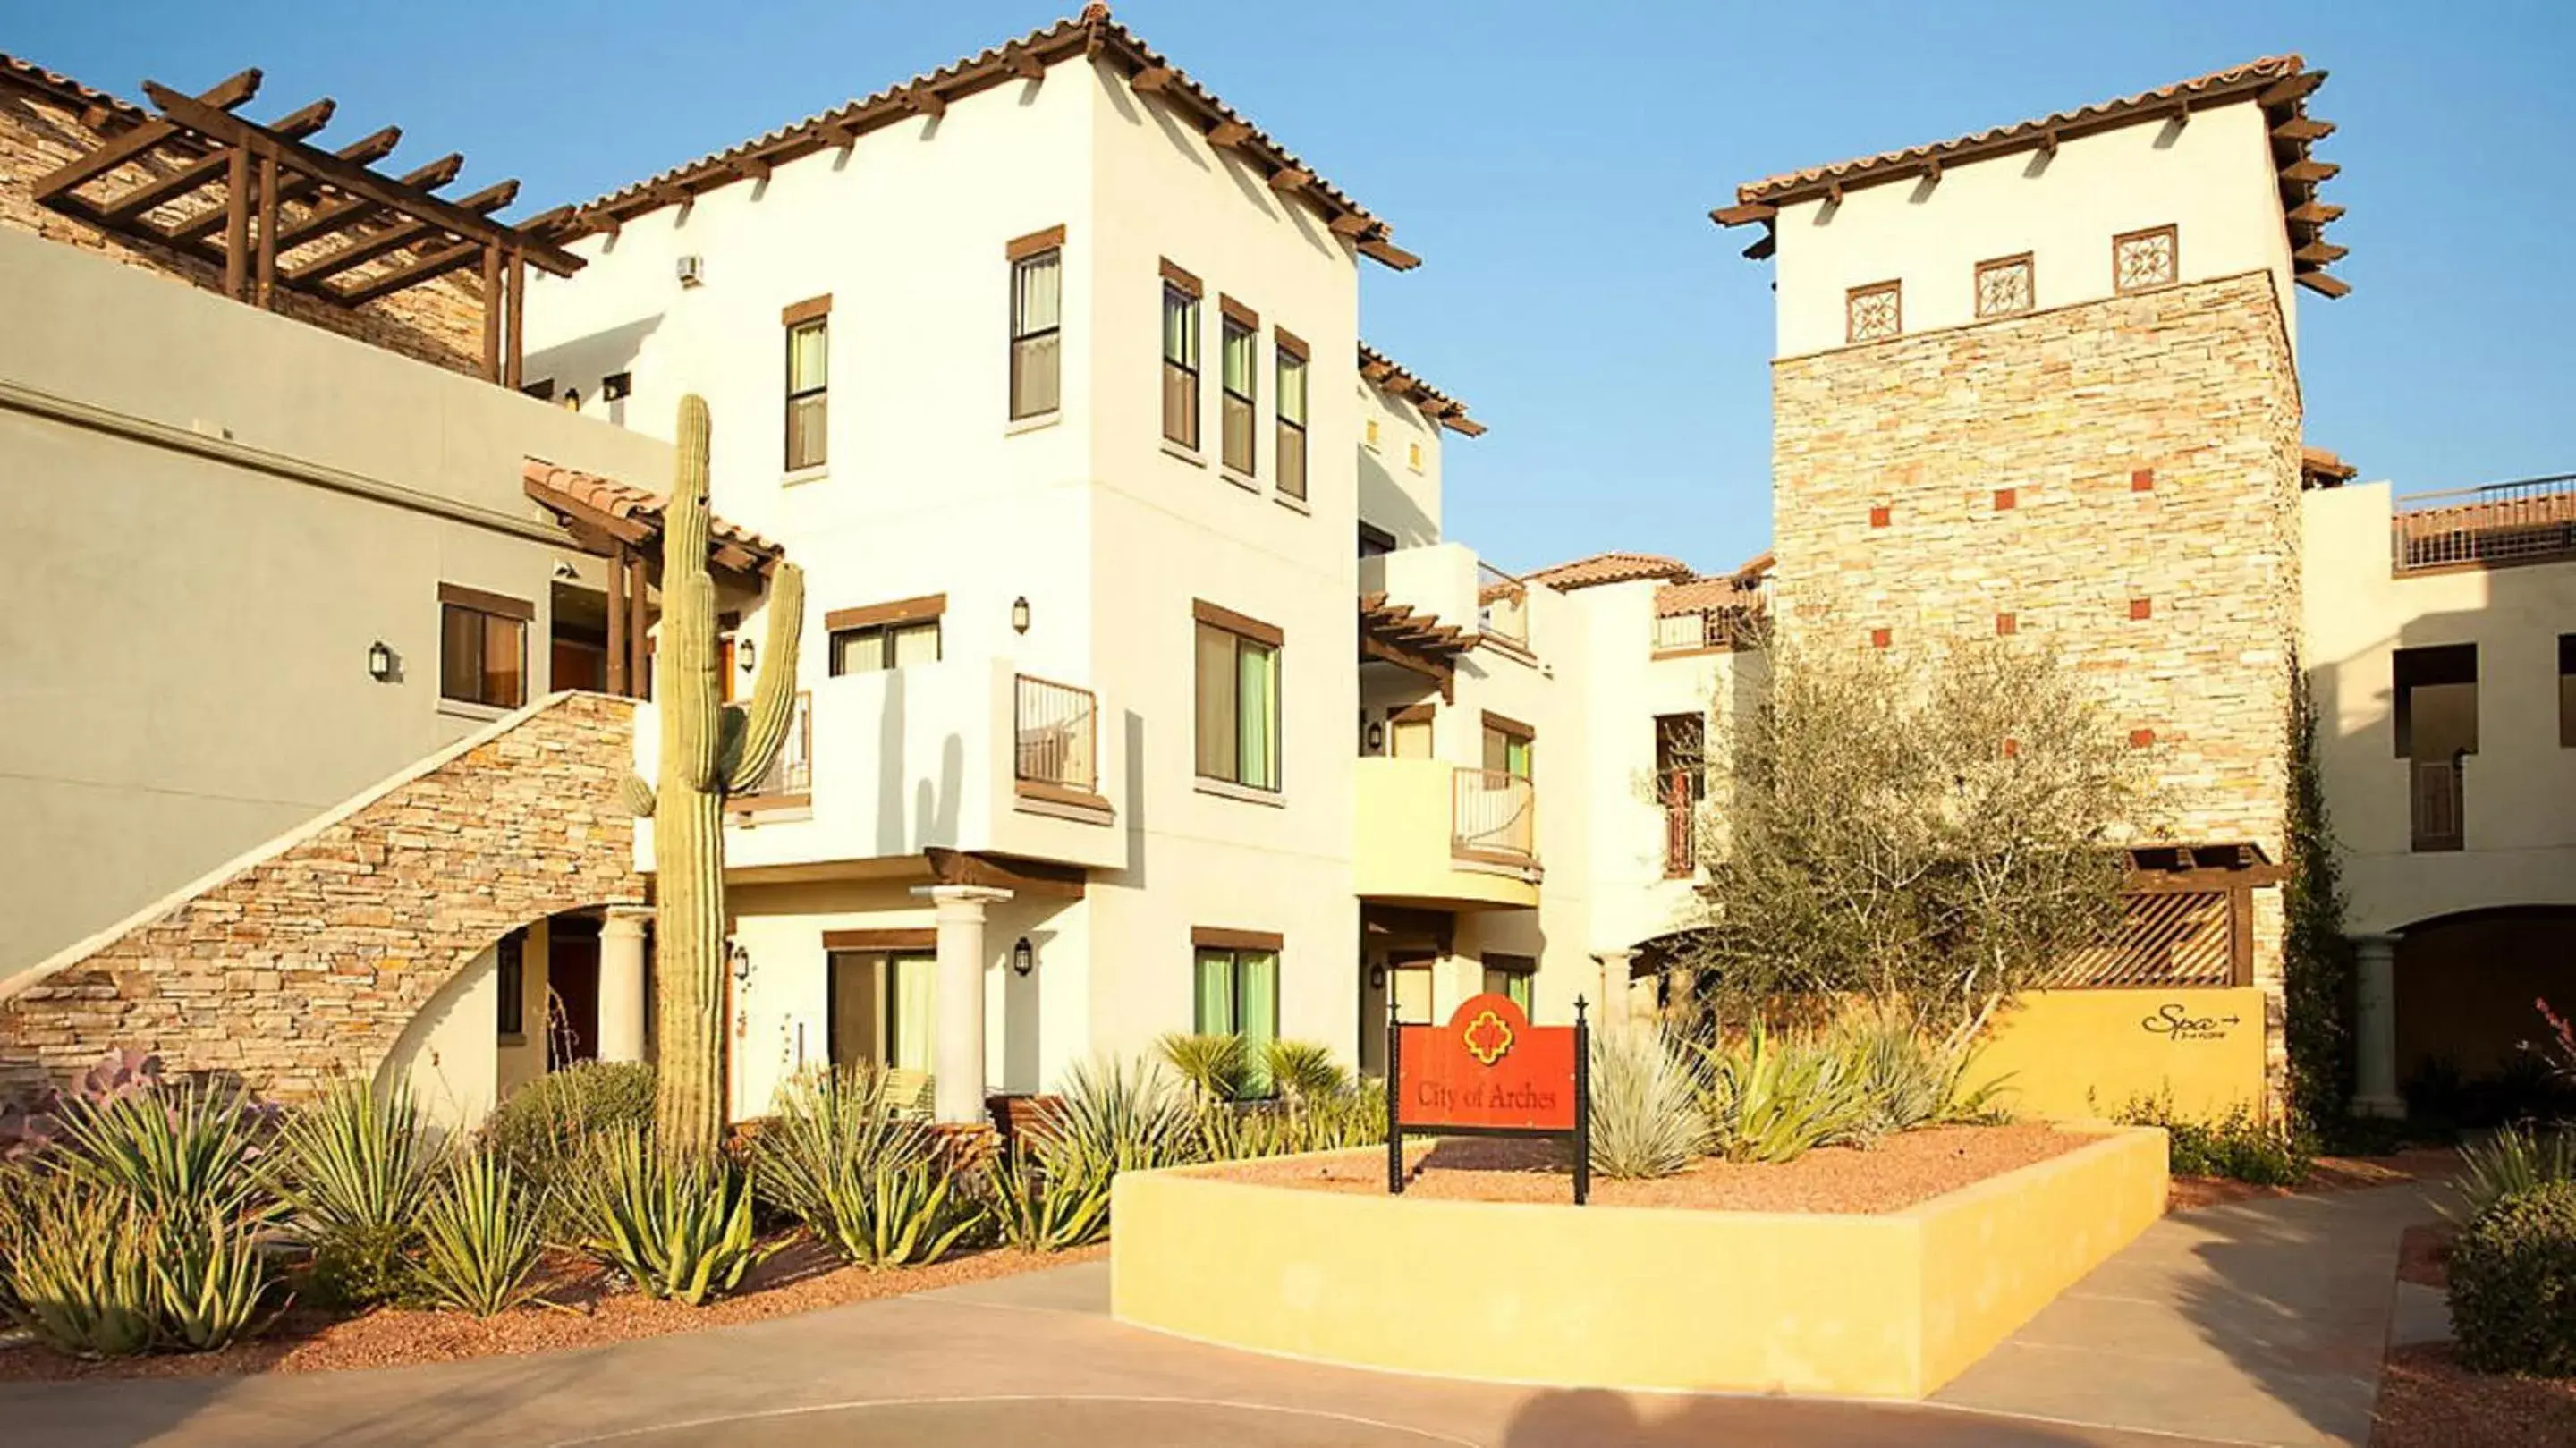 Property building in Bluegreen Vacations Cibola Vista Resort & Spa, An Ascend Resort